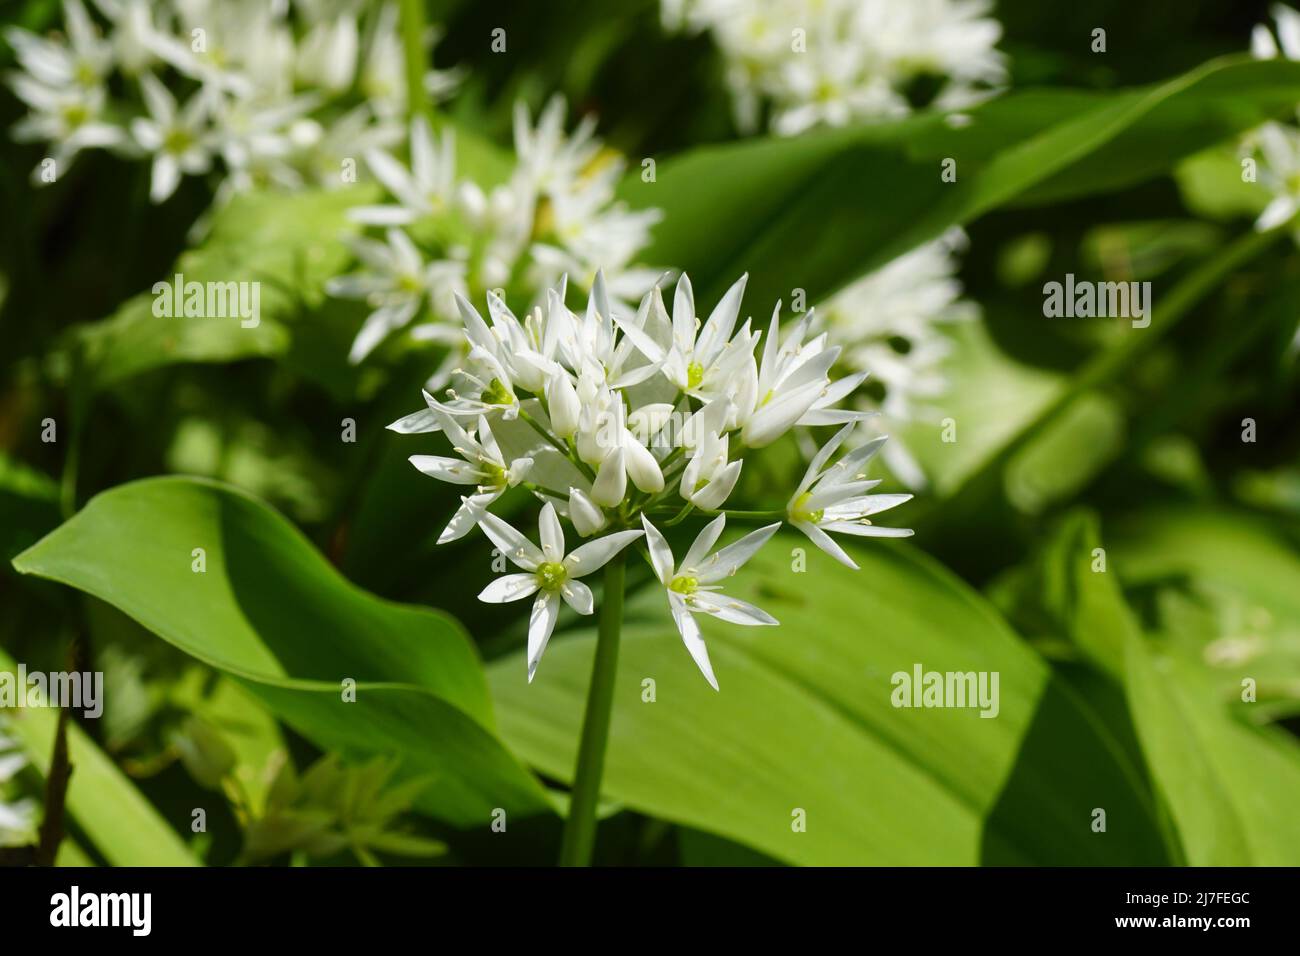 White flowers of wild garlic (Allium ursinum) a bulbous perennial flowering plant in the amaryllis family Amaryllidaceae. Spring, Netherlands Stock Photo